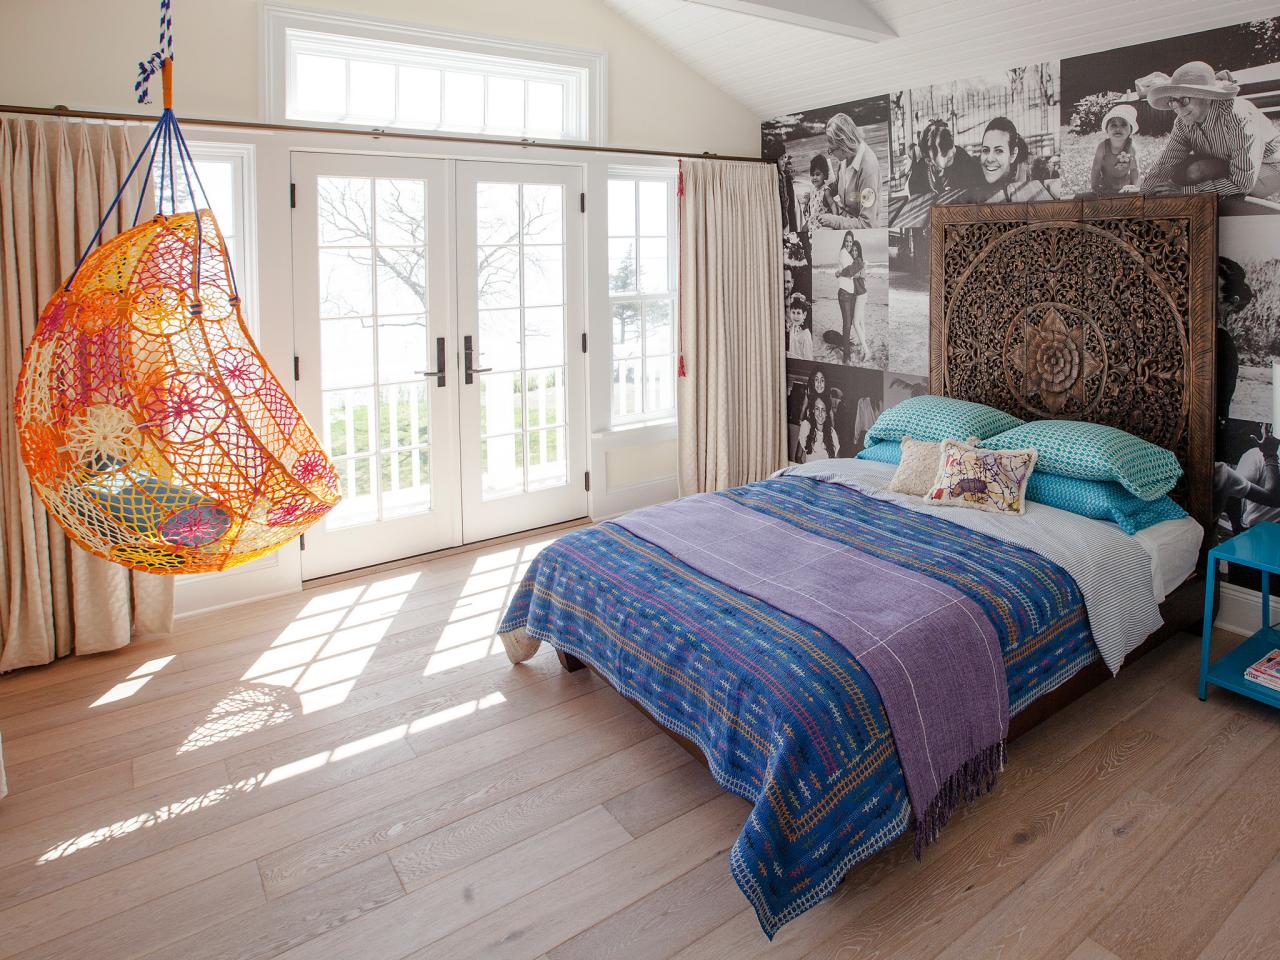 Wood Floors For Bedrooms Pictures, Rugs For Hardwood Floors In Bedrooms